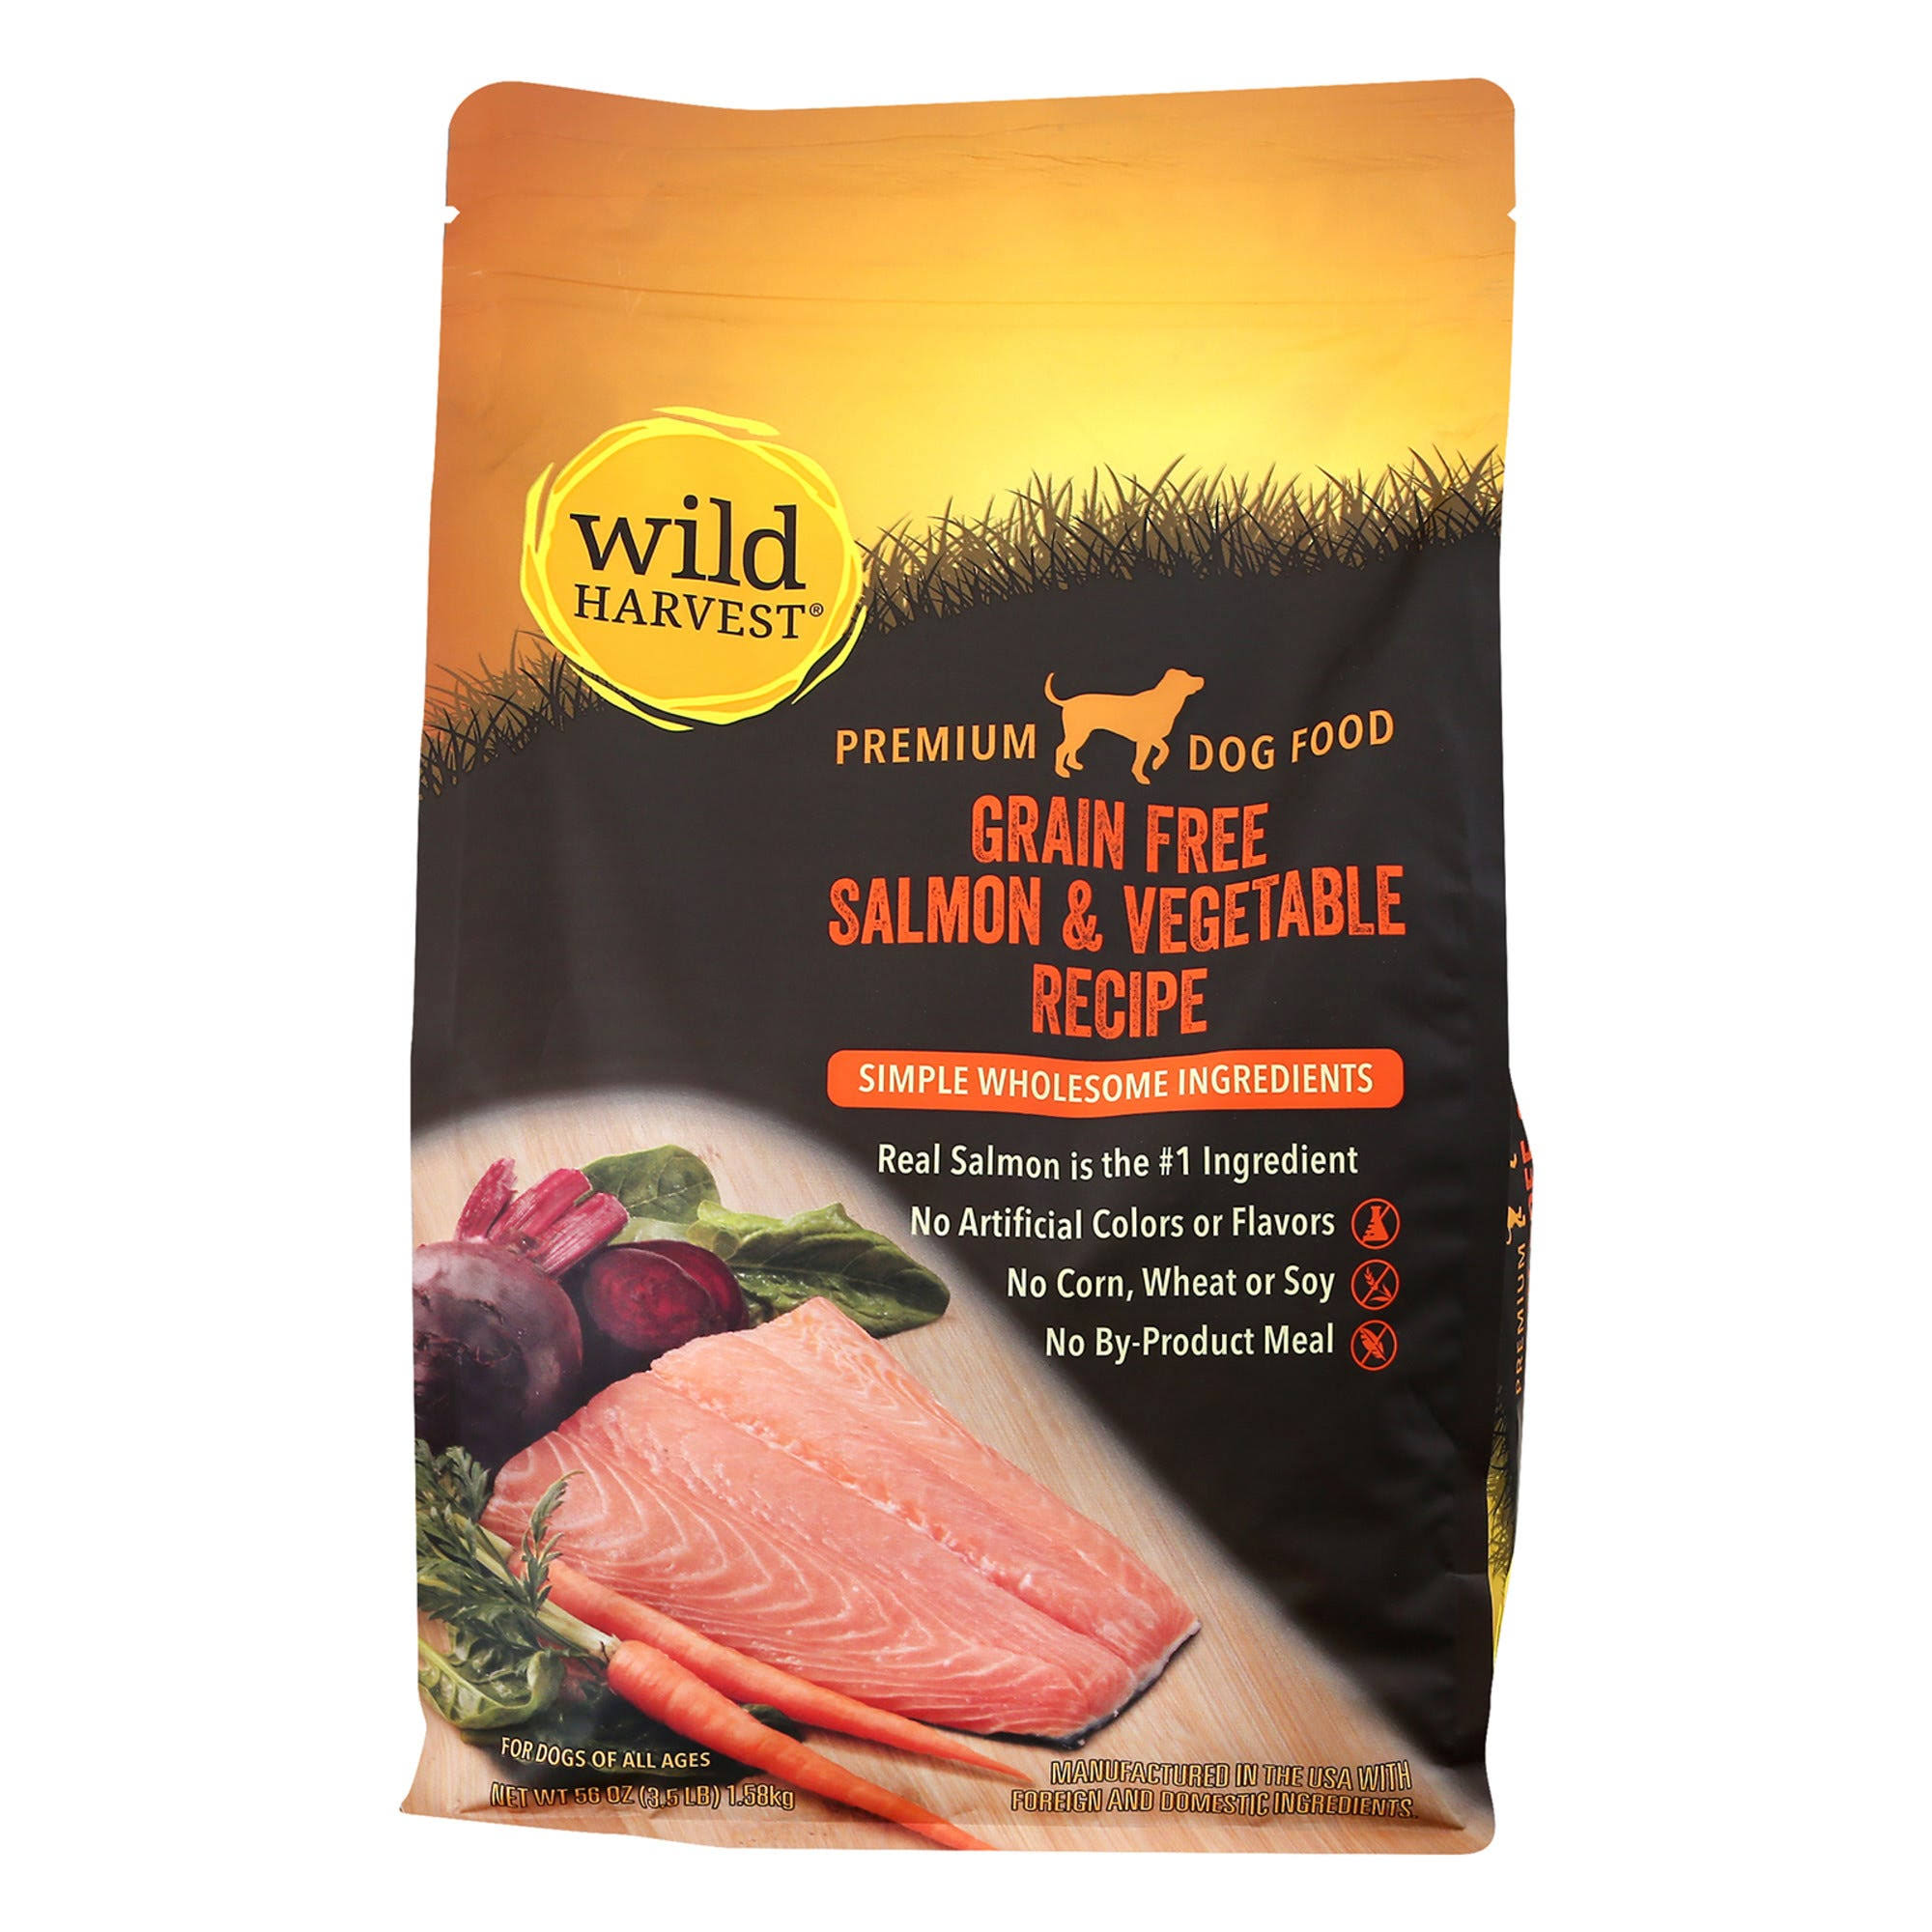 Wild Harvest Grain Free Salmon & Vegetable Recipe Premium Dog Food - 3.5 lb